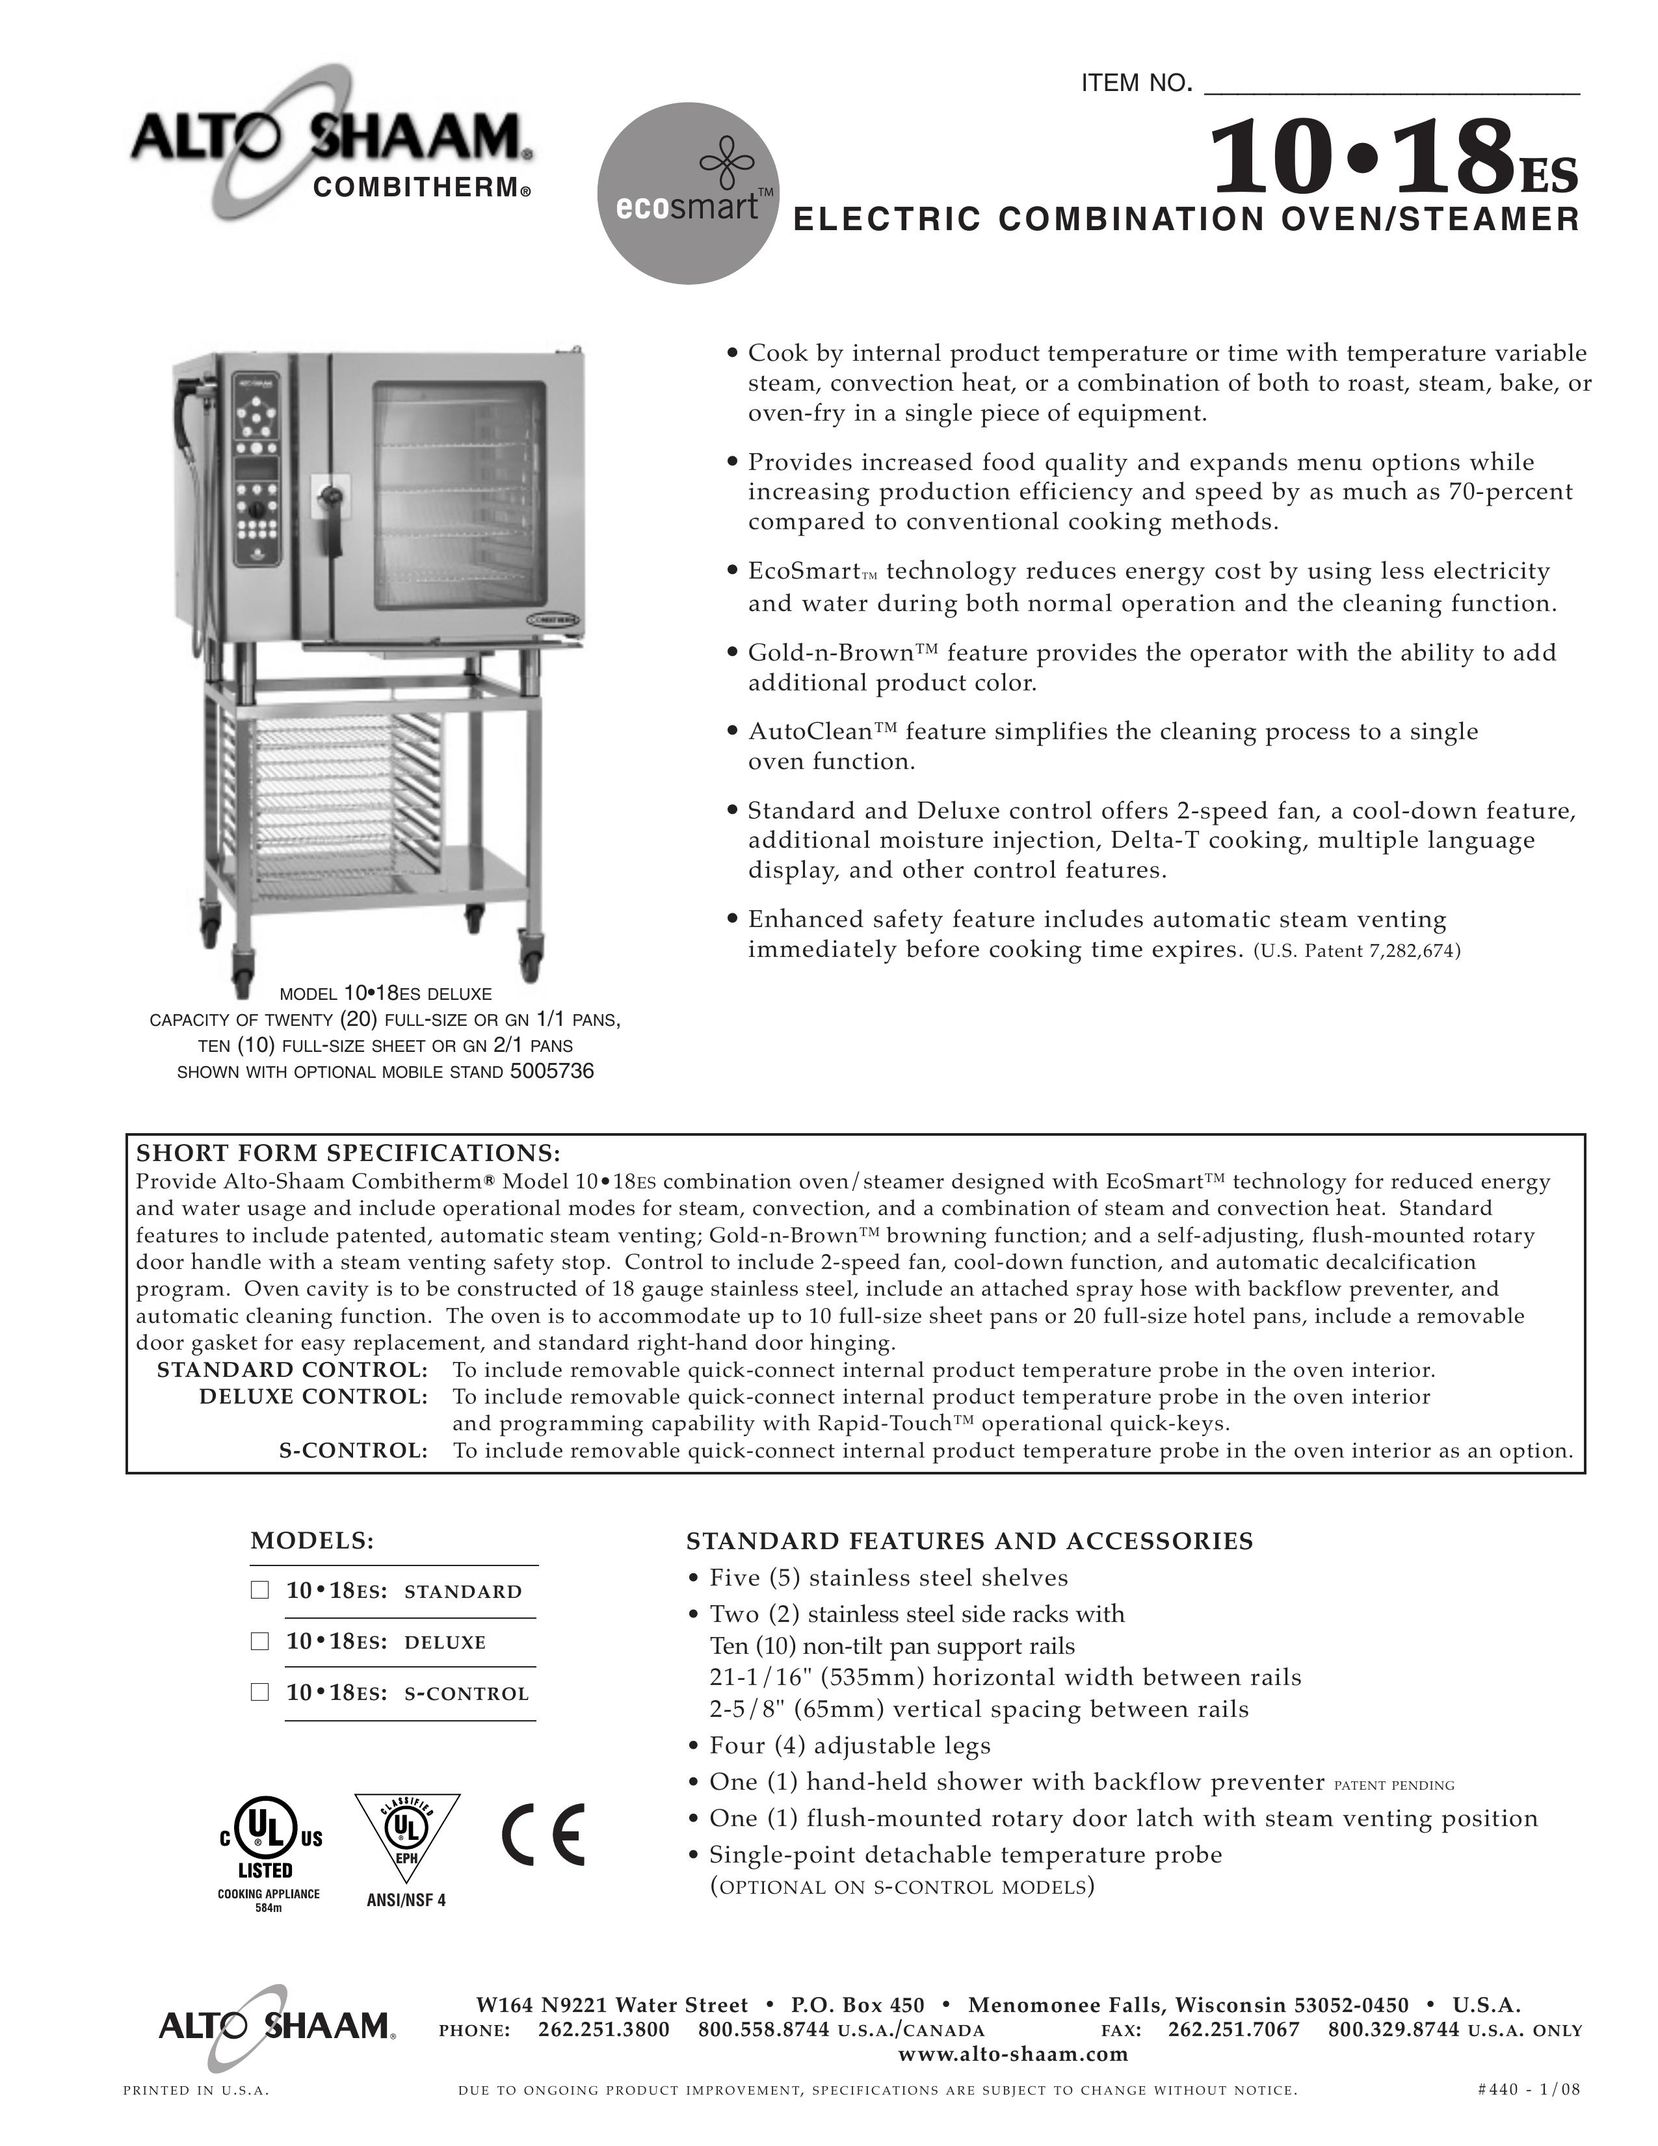 Alto-Shaam 10.18ES Oven User Manual